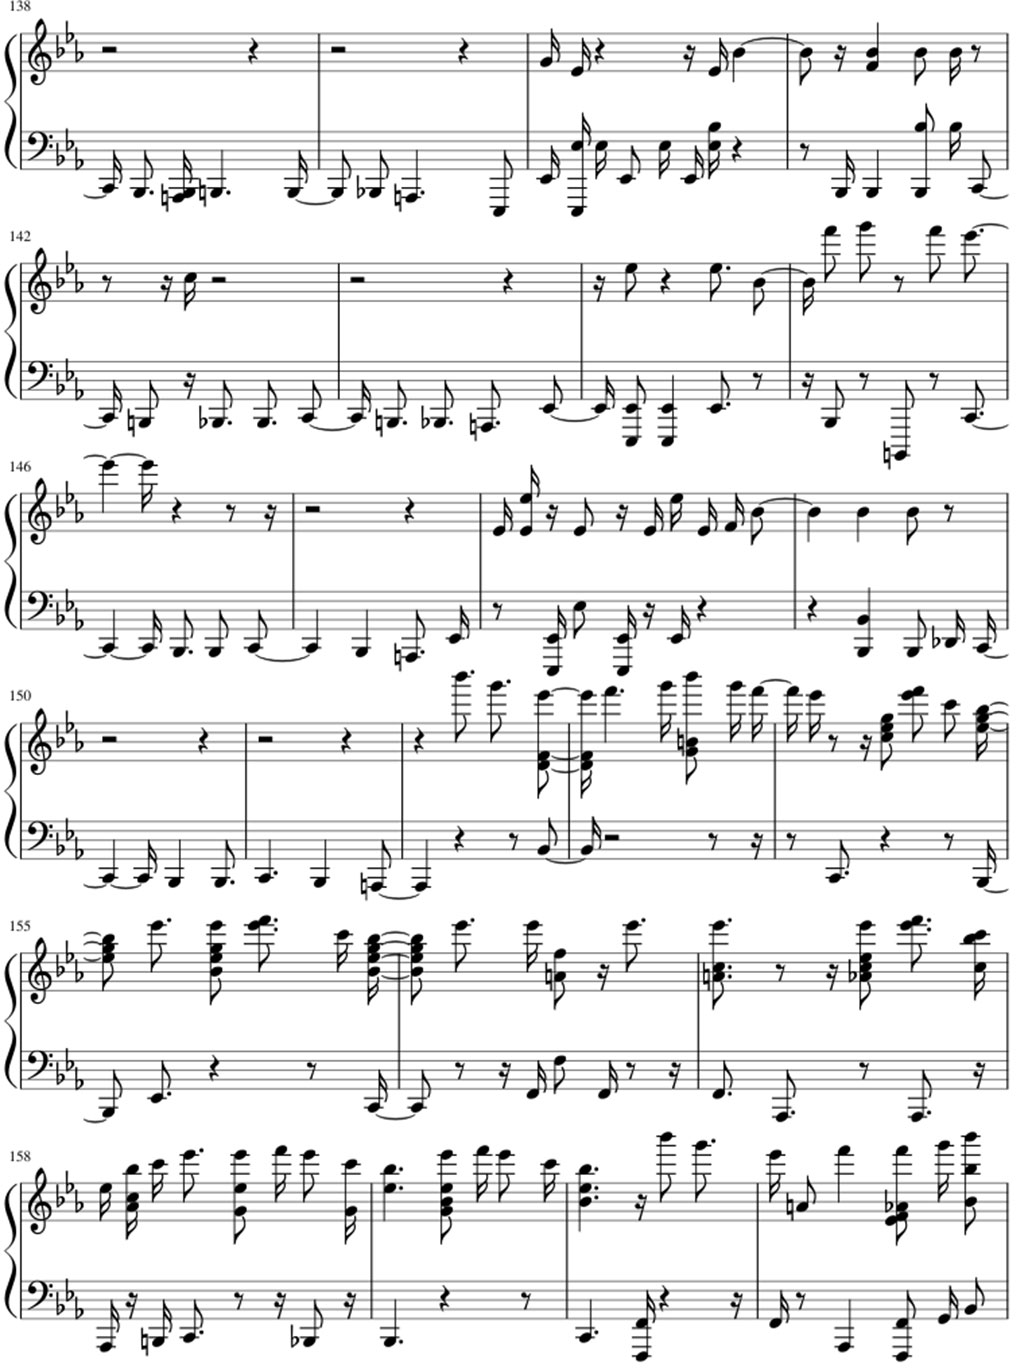 Windfall sheet music notes 6